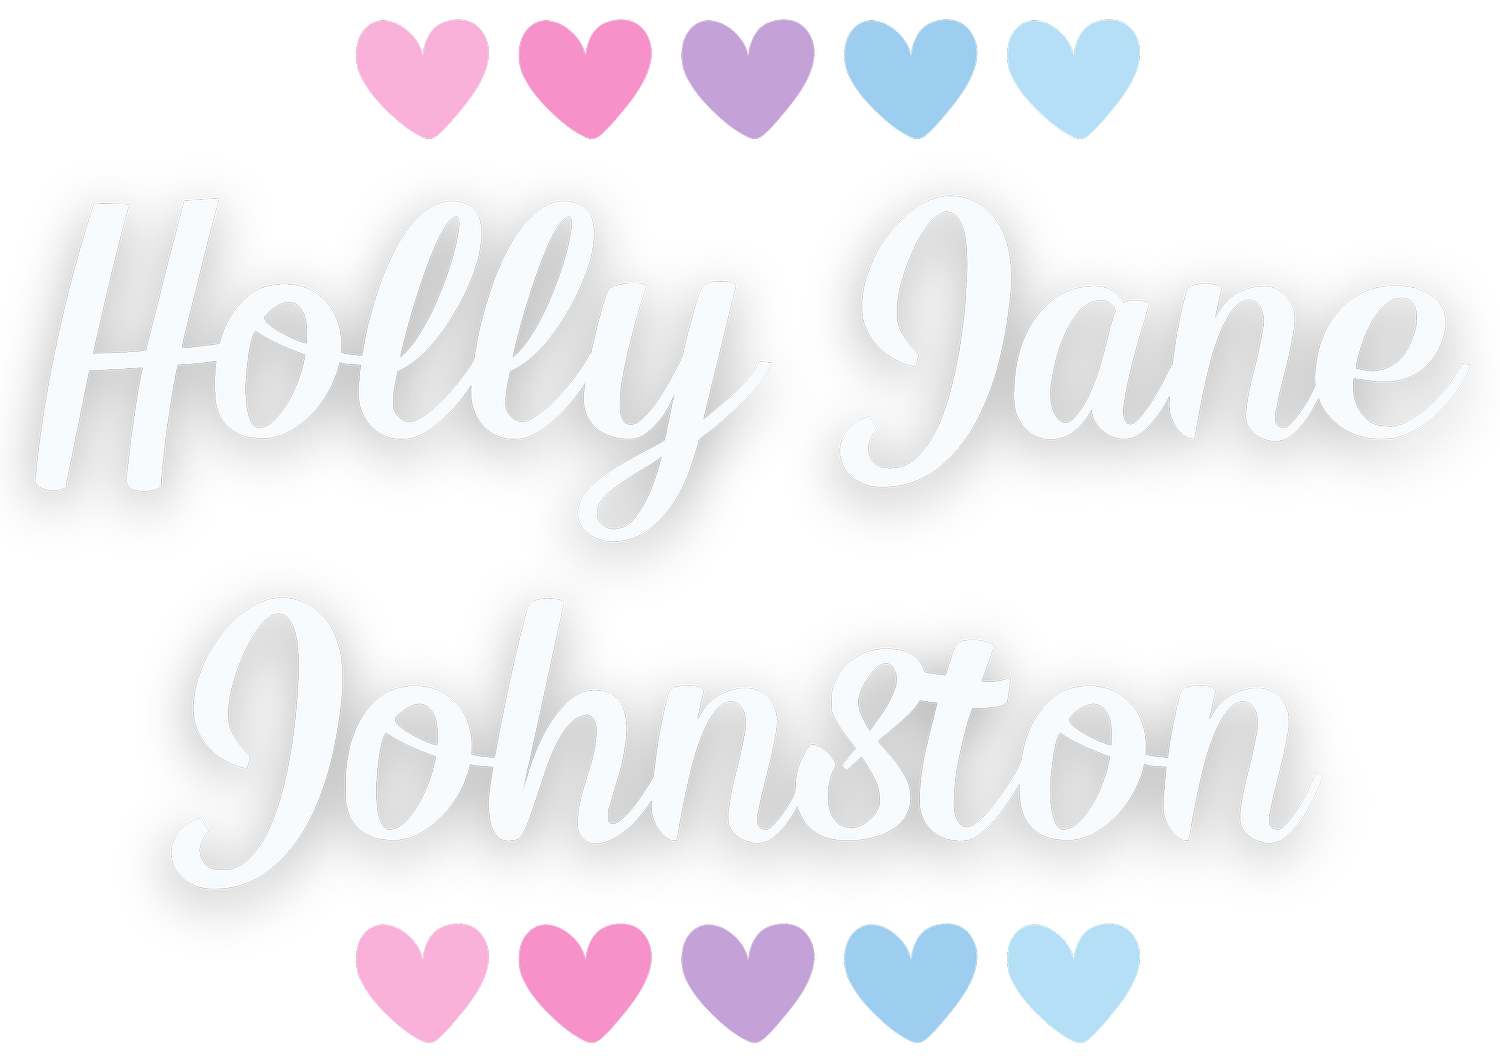 Holly Jane